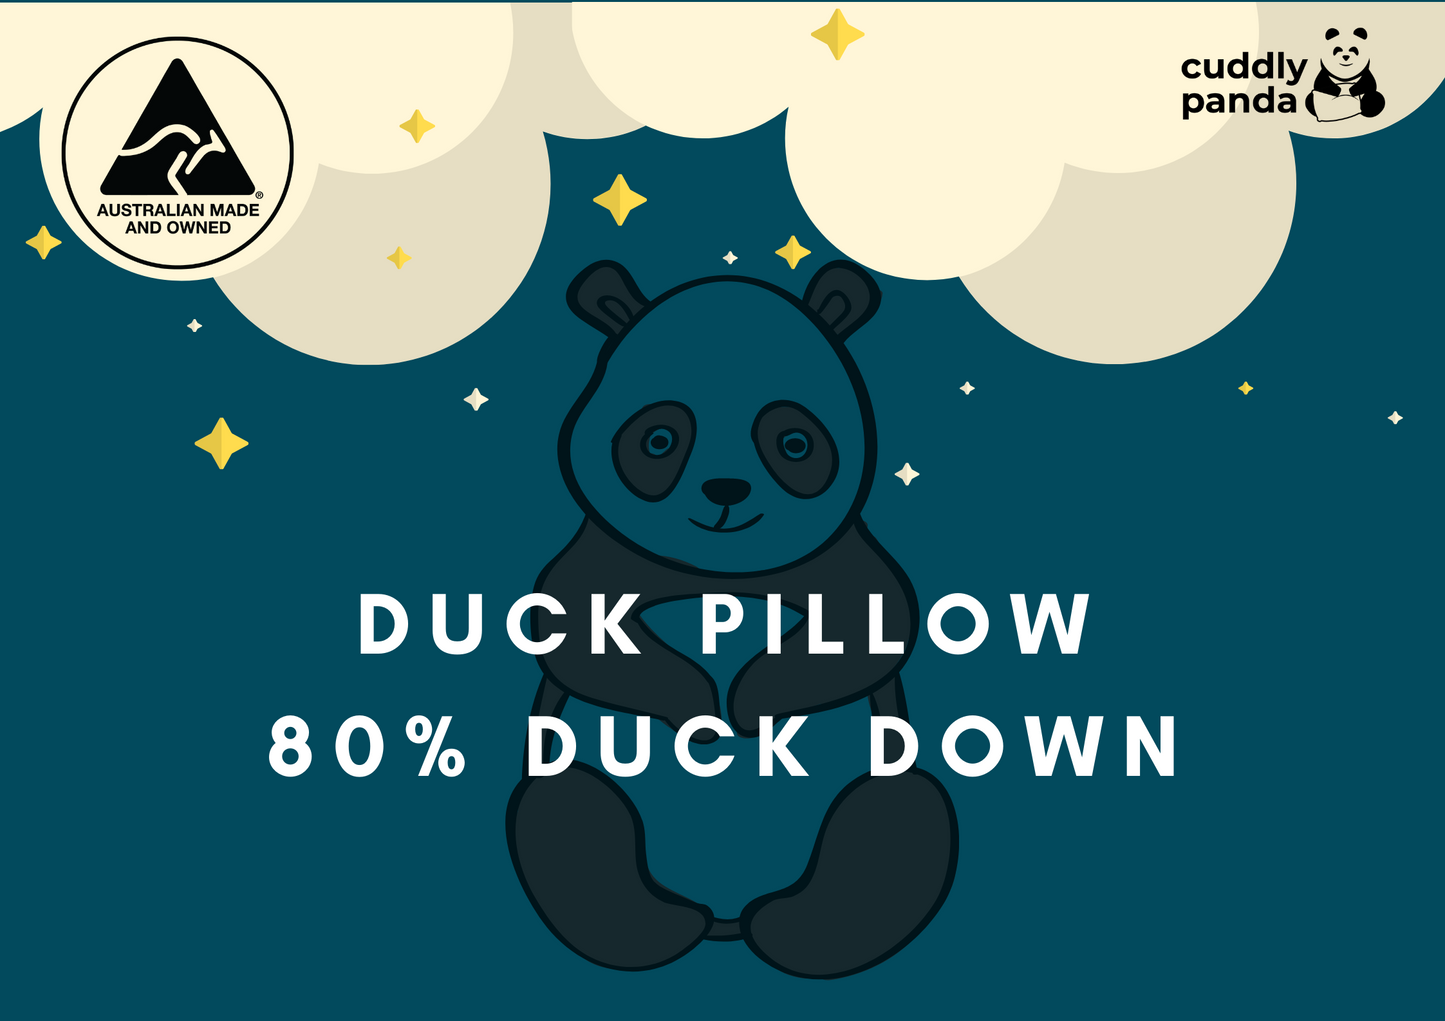 80% Duck Down Pillow - Cuddly Panda Bedding